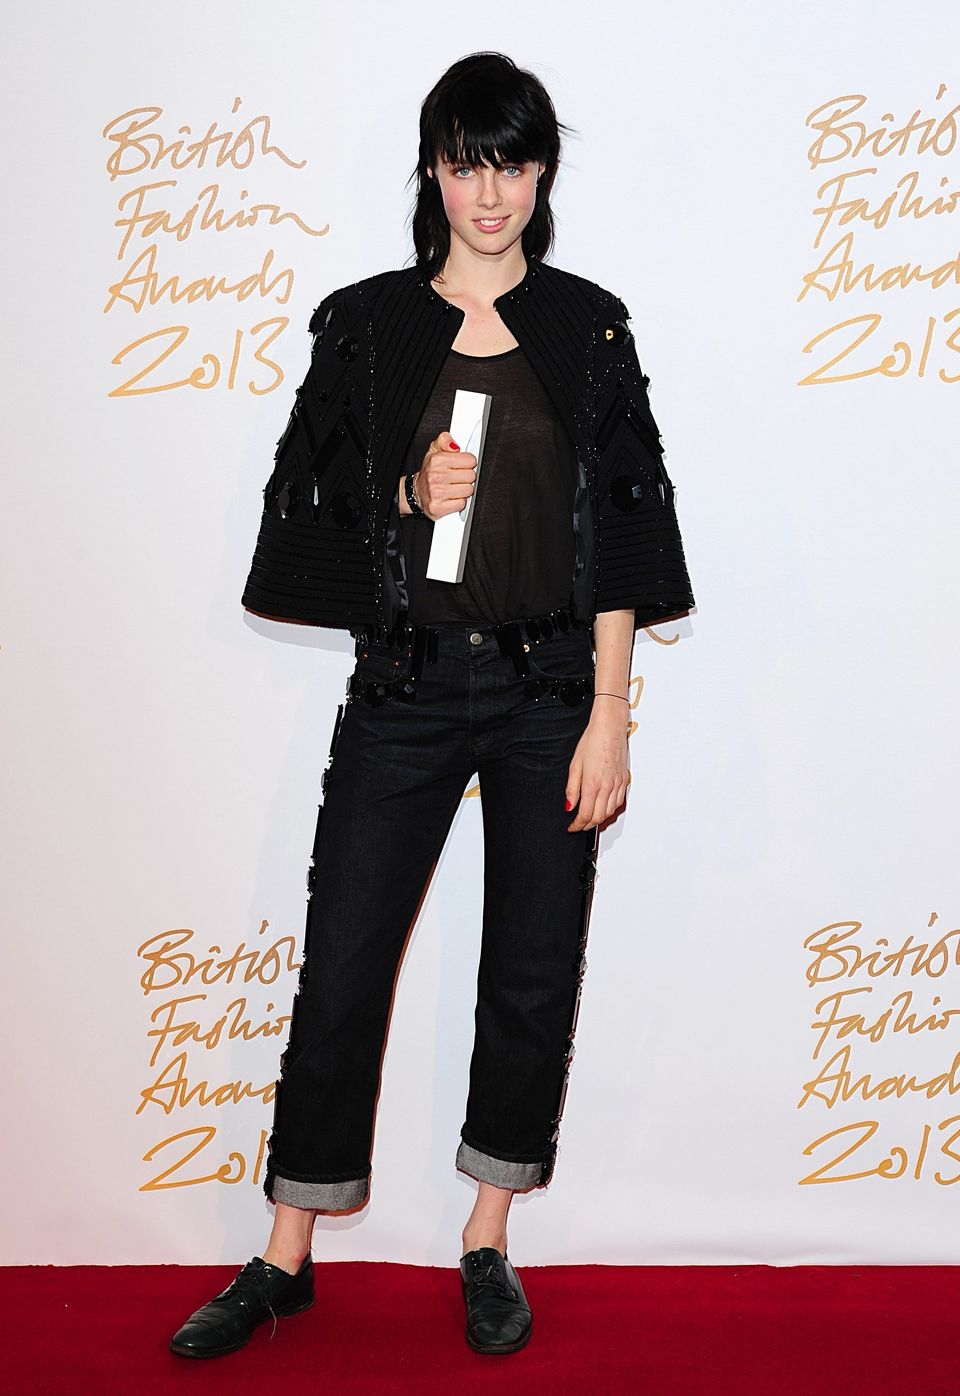 British Fashion Awards 2013 - London